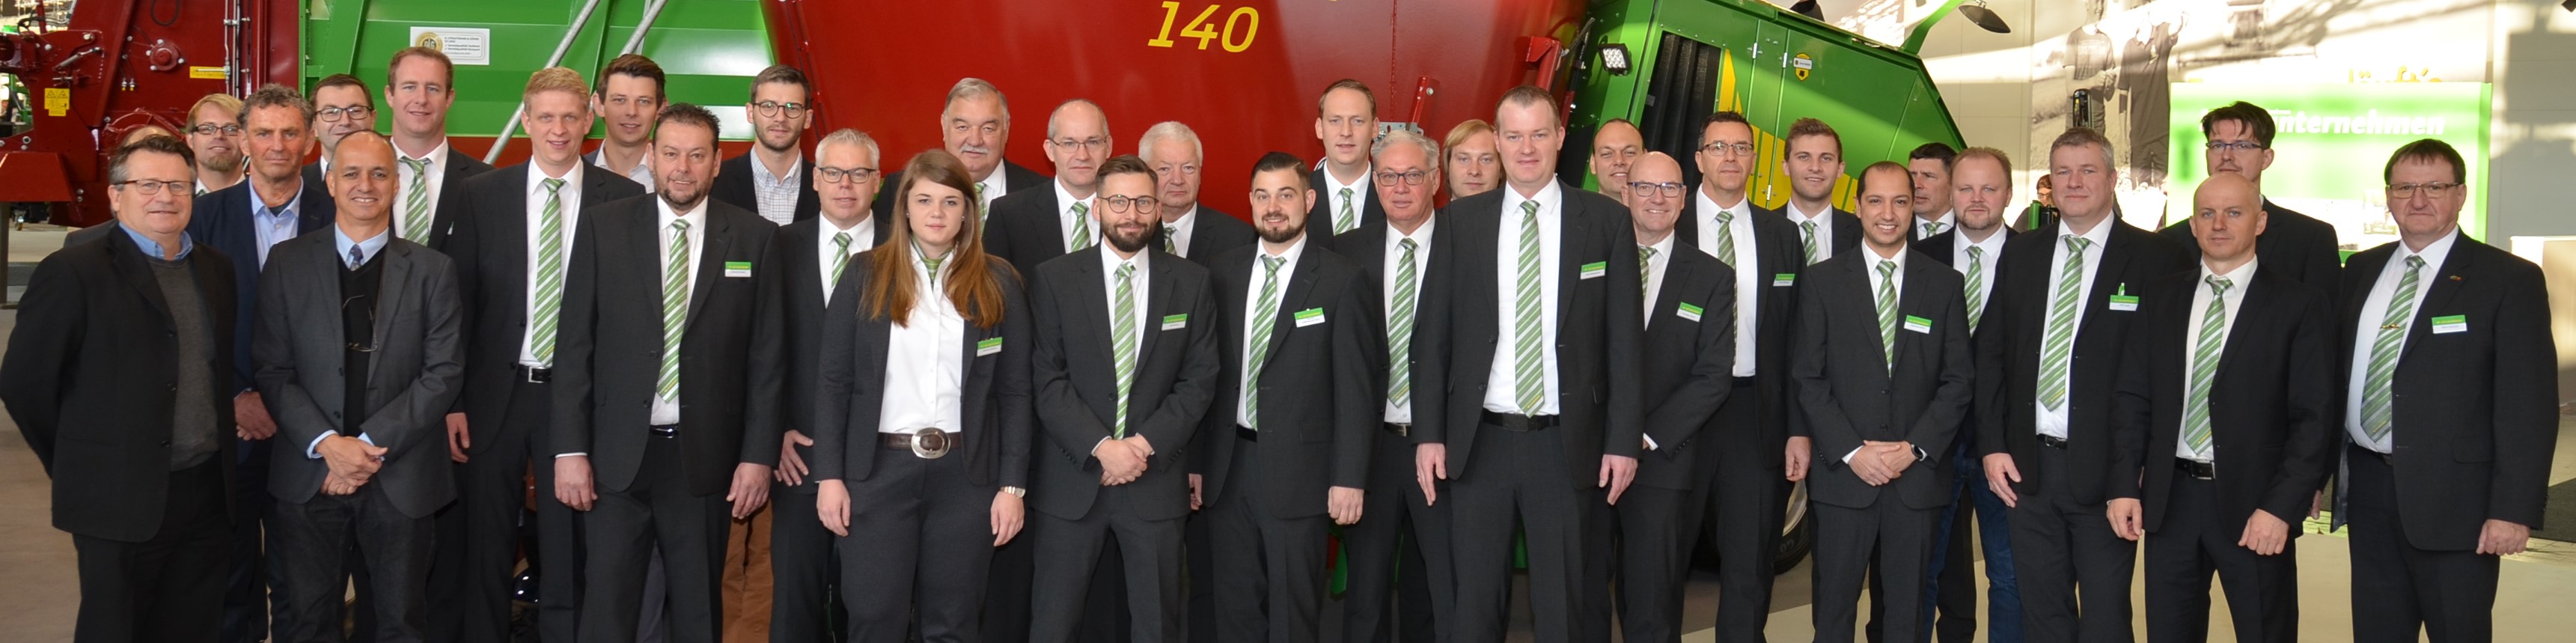 Strautmann team at Agritechnica 2019